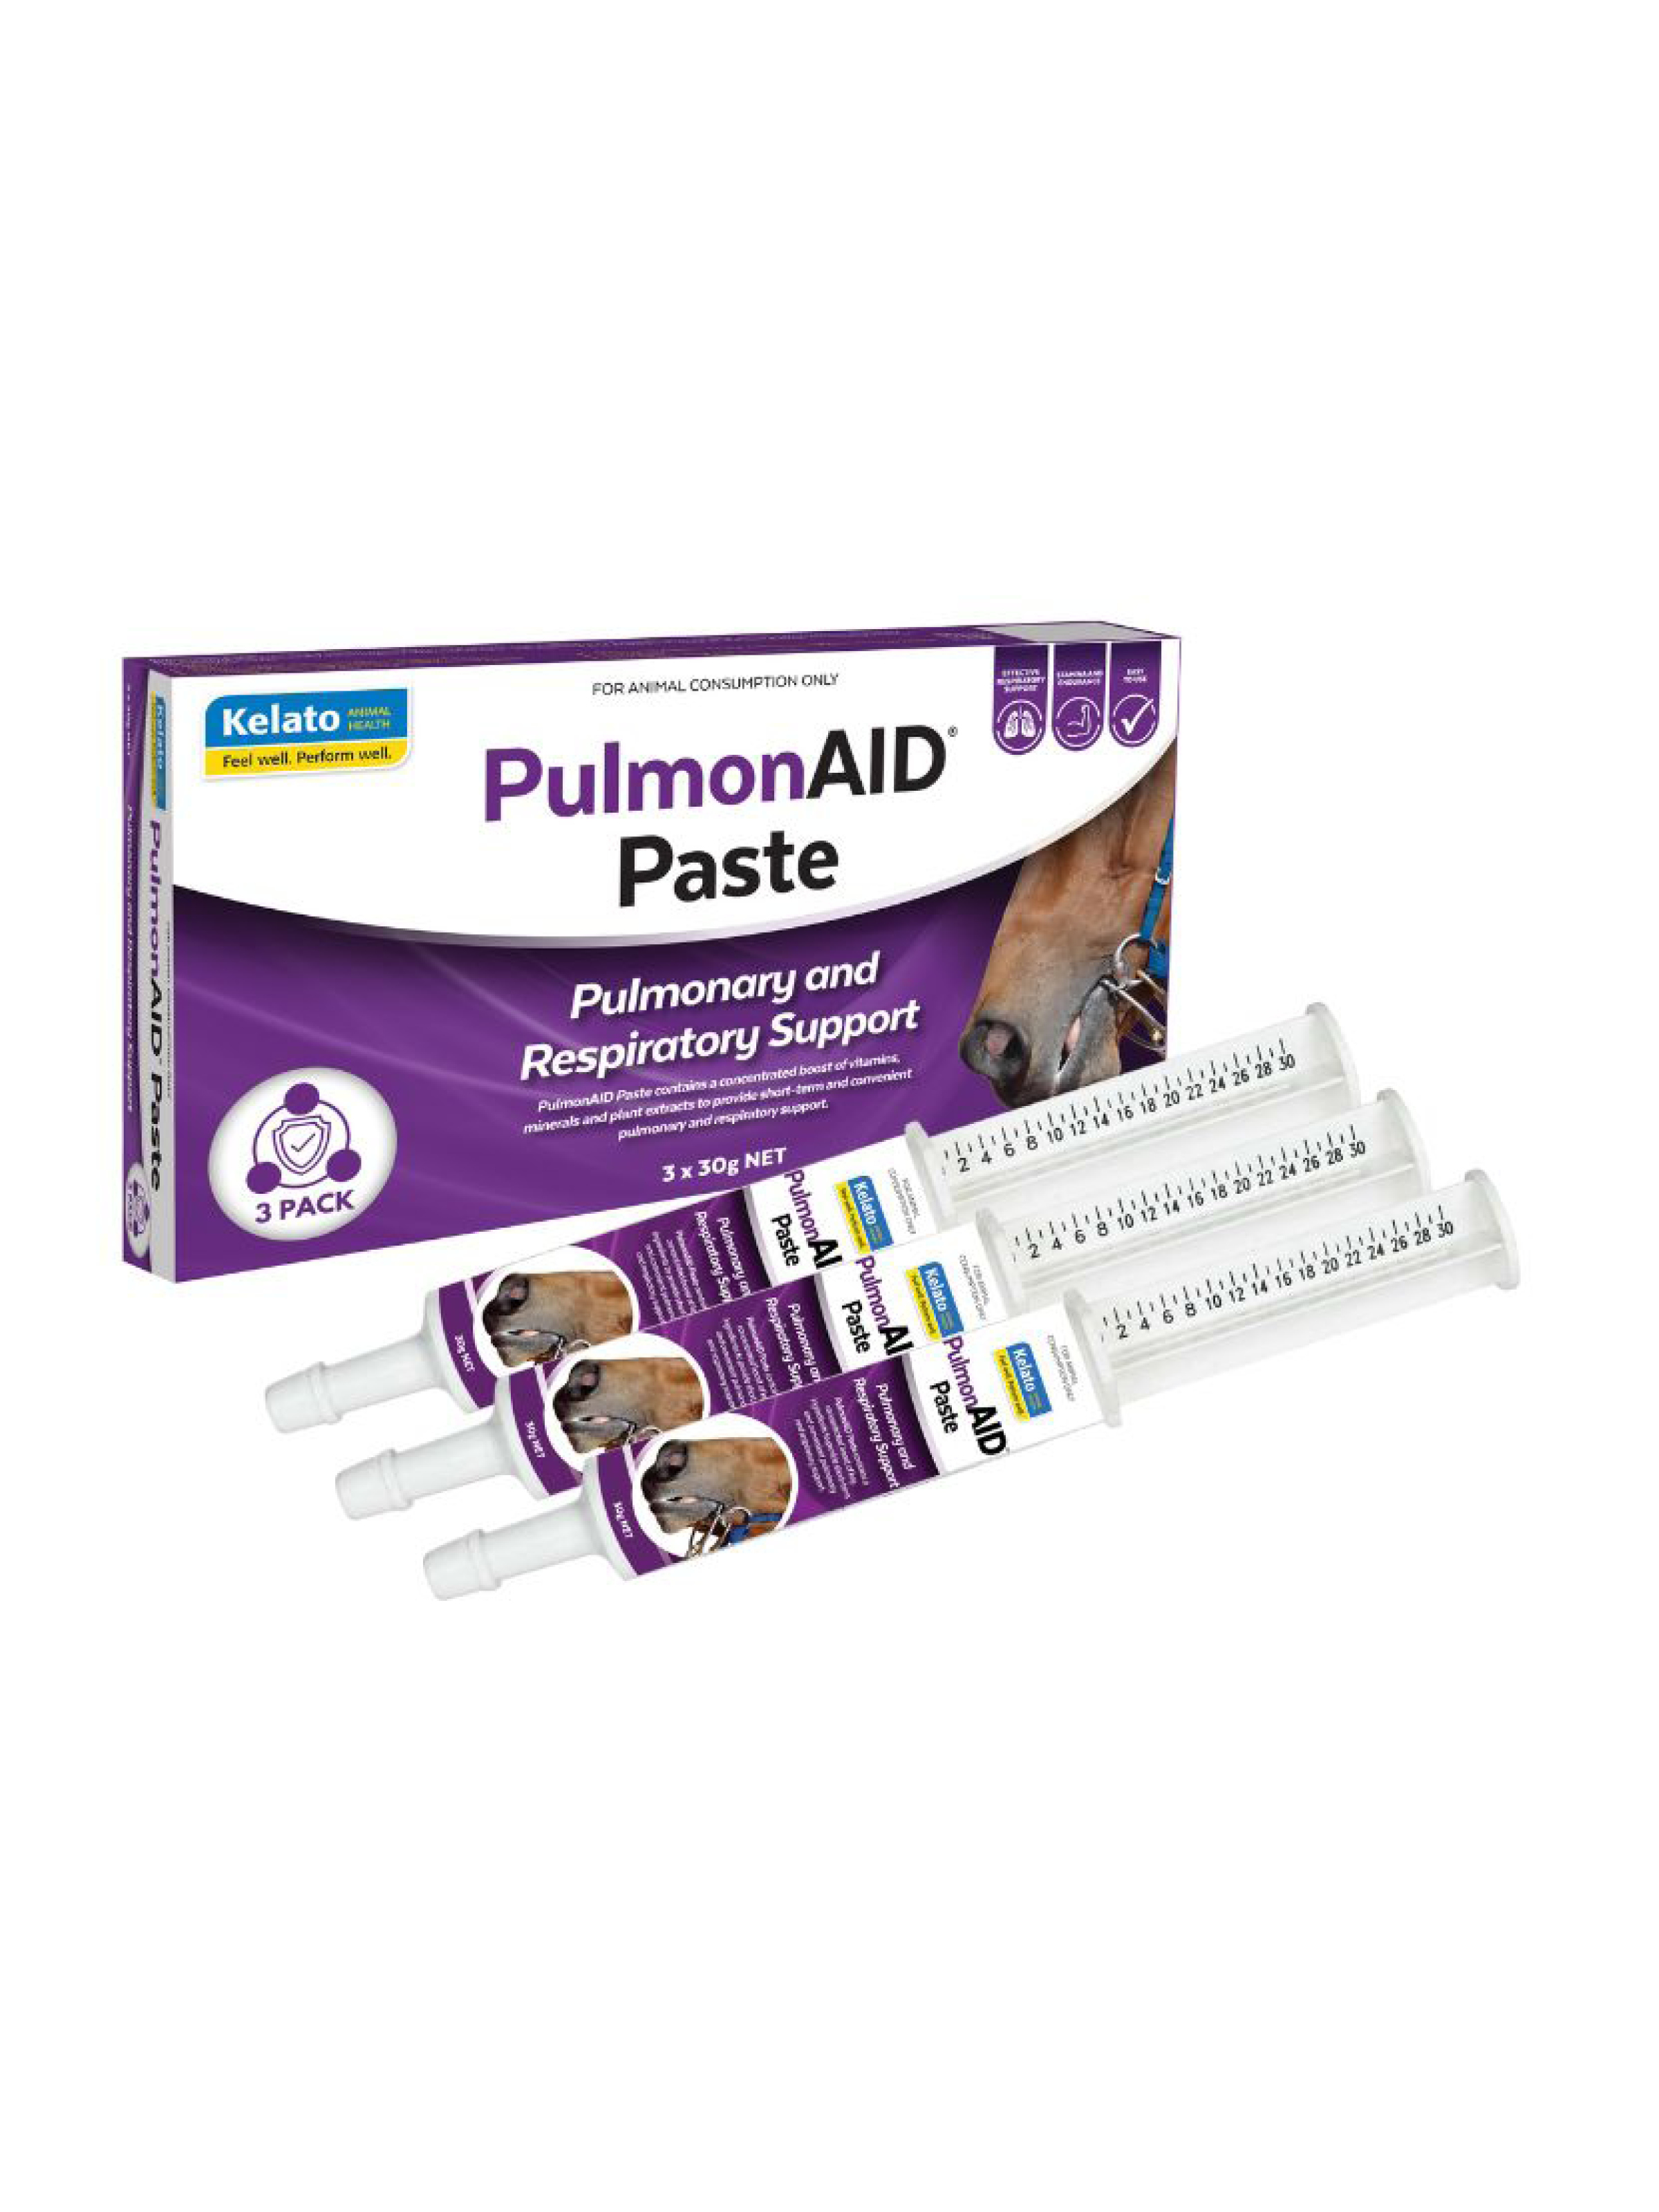 PulmonAID Paste